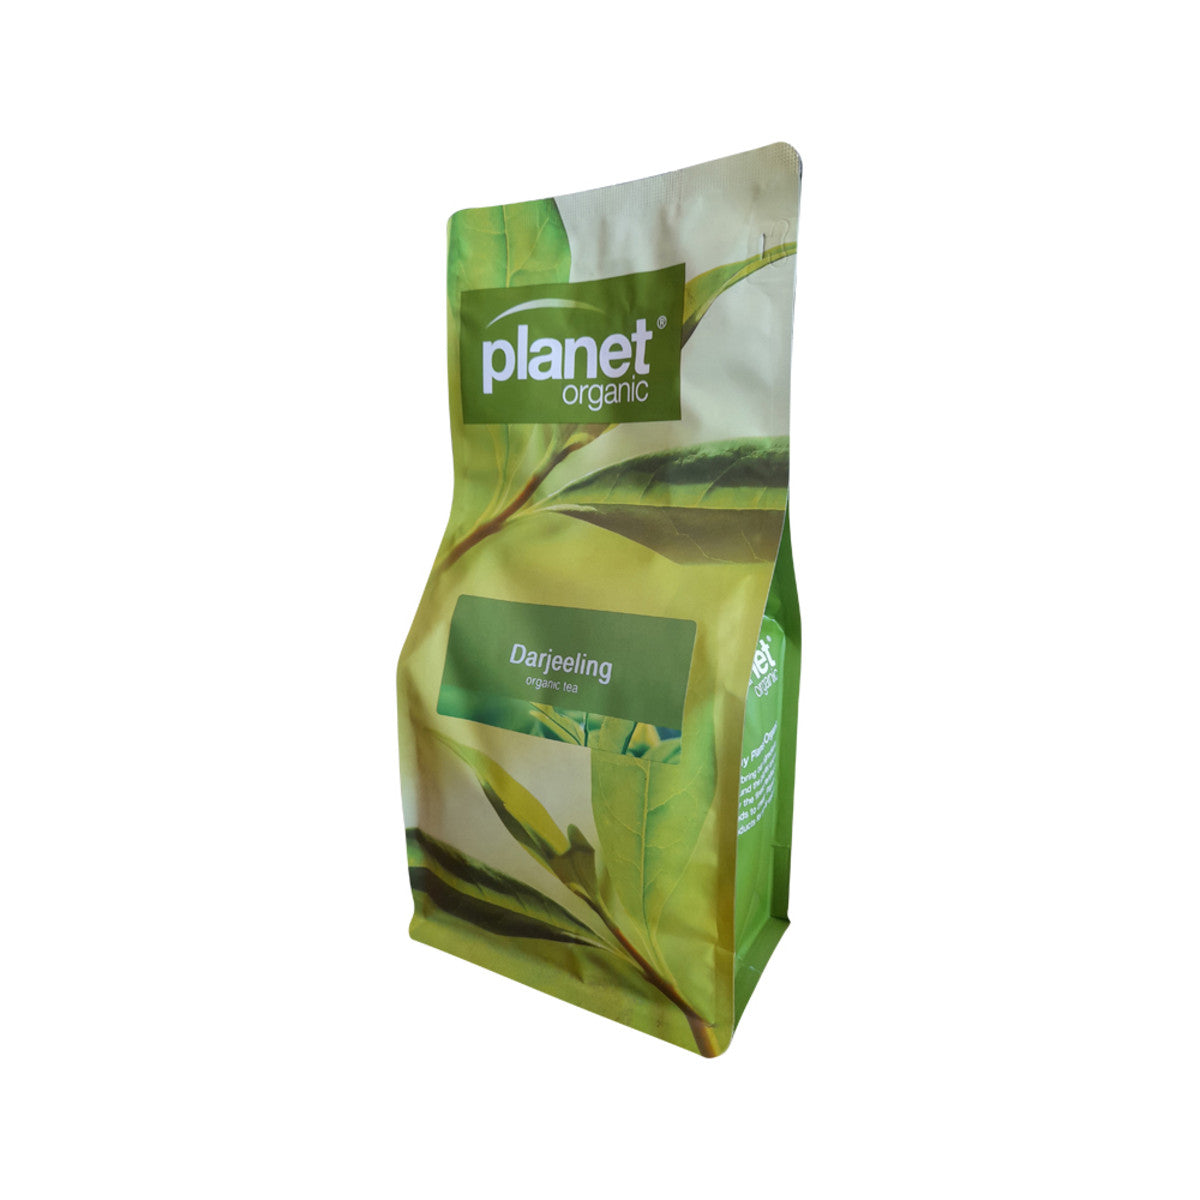 Planet Organic - Darjeeling Loose Leaf Tea